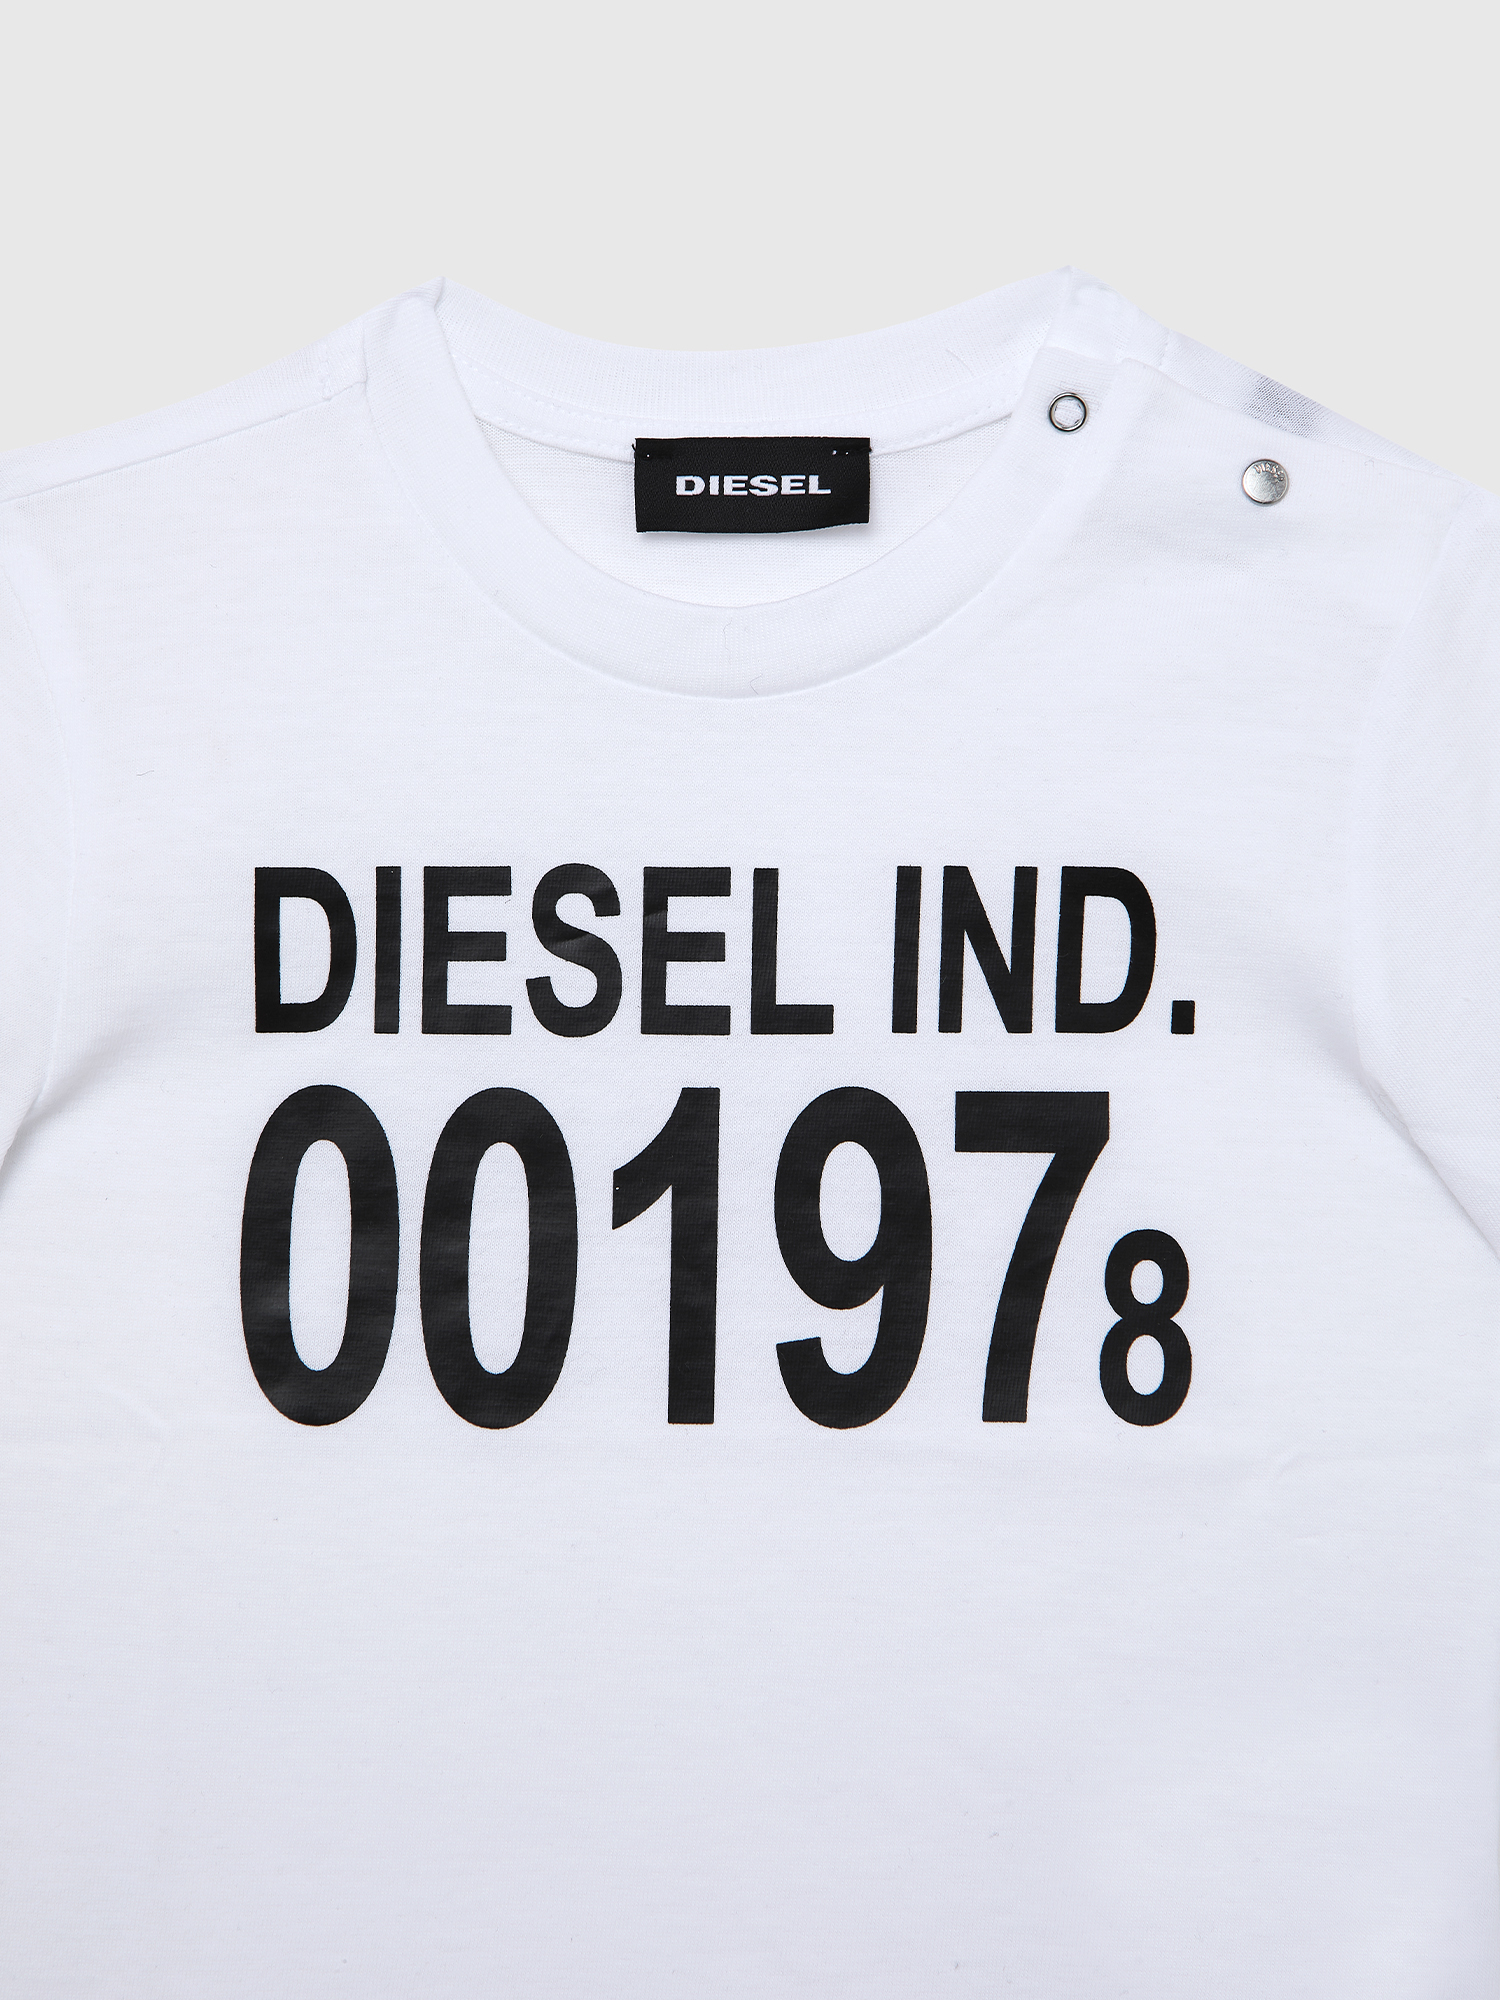 Diesel - TDIEGO001978B, White/Black - Image 3